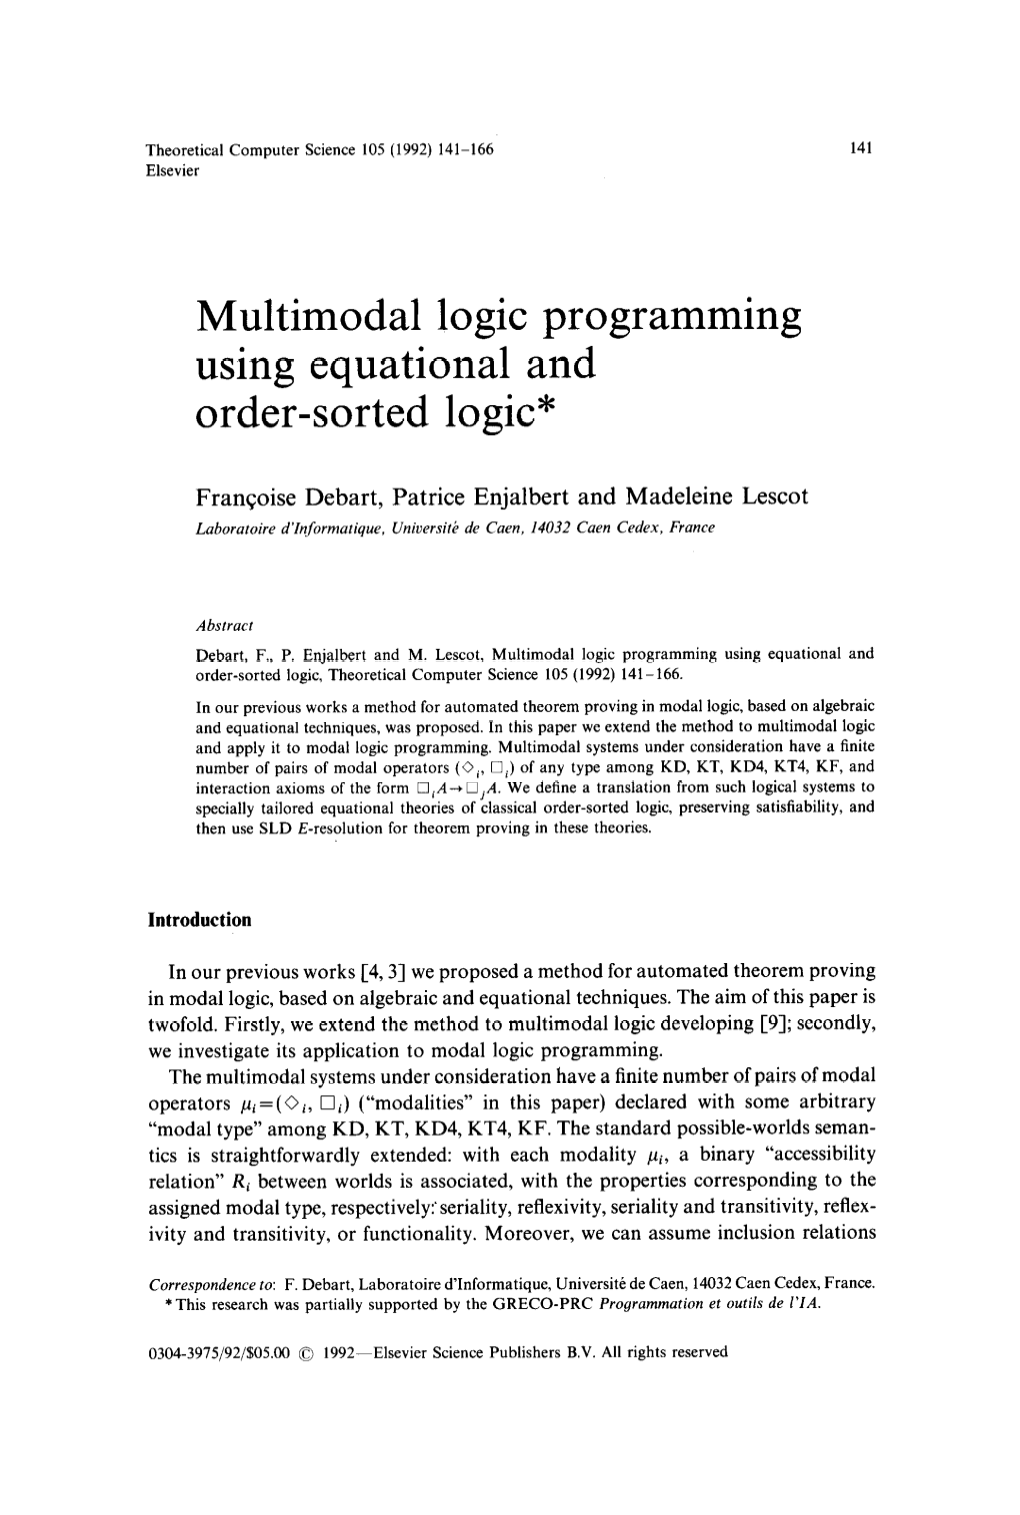 Multimodal Logic Programminrr U Using Equational and Order-Sorted Logic*